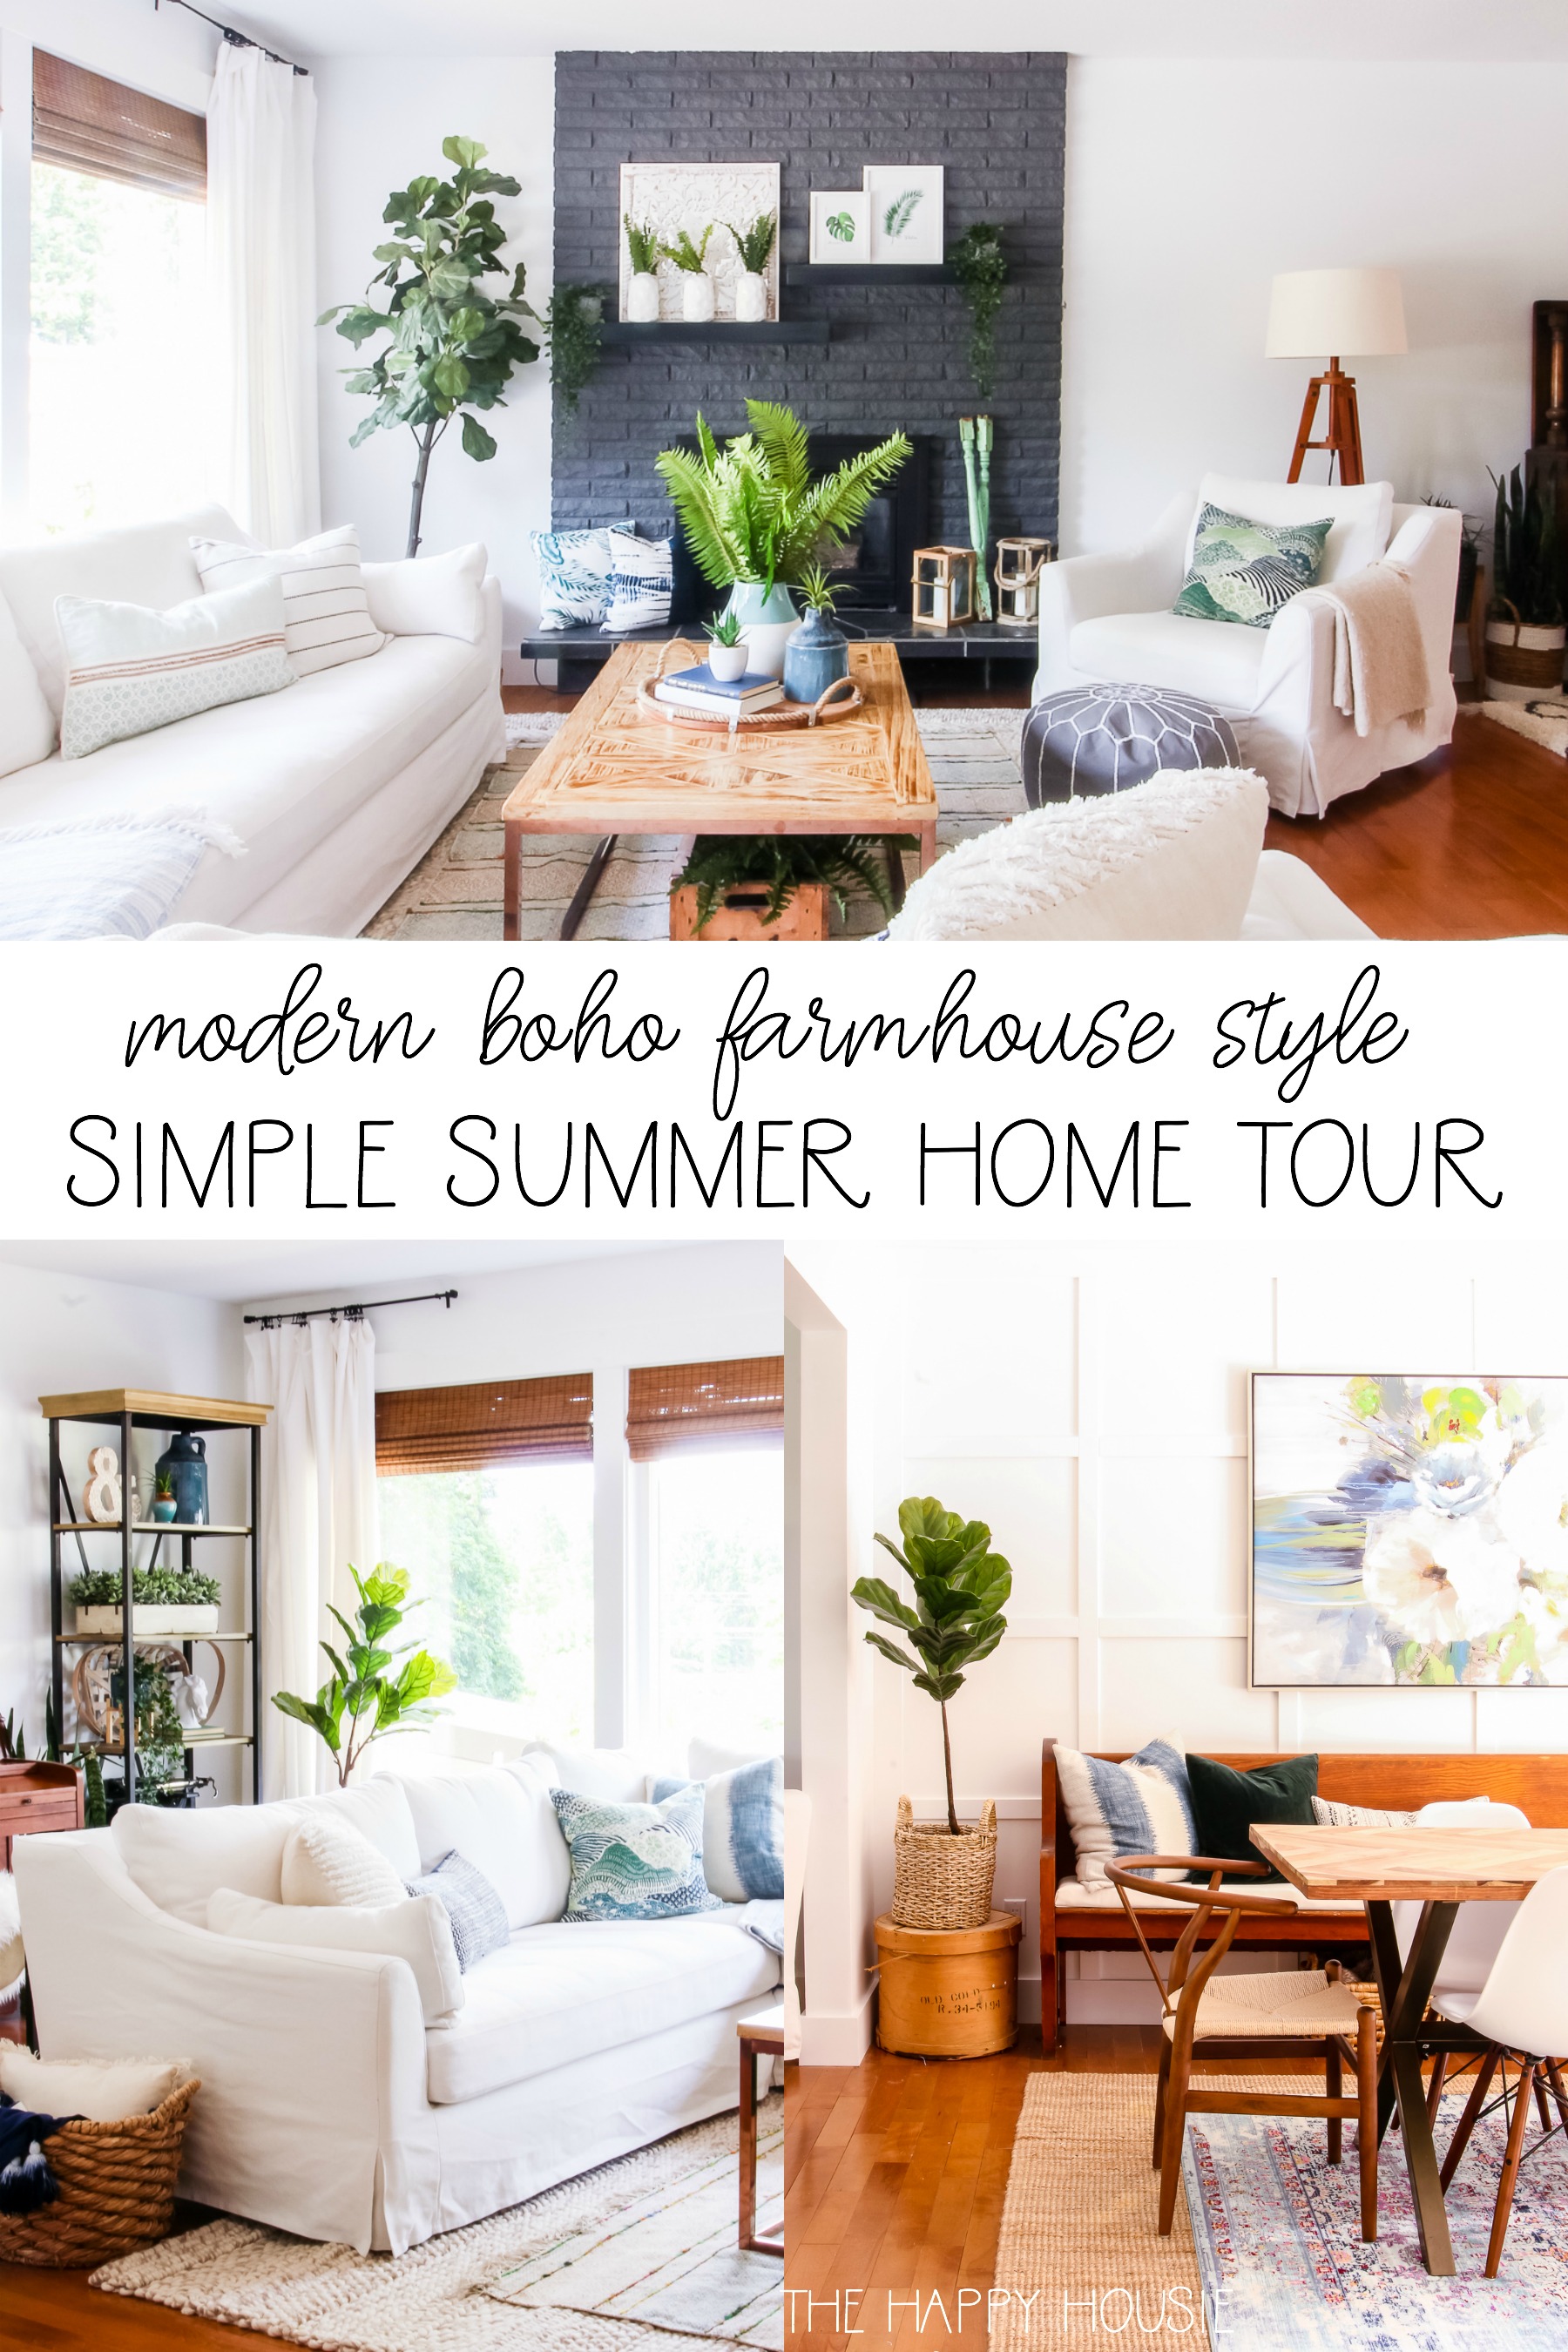 Modern Boho Farmhouse Style Simple Summer Home Tour poster.